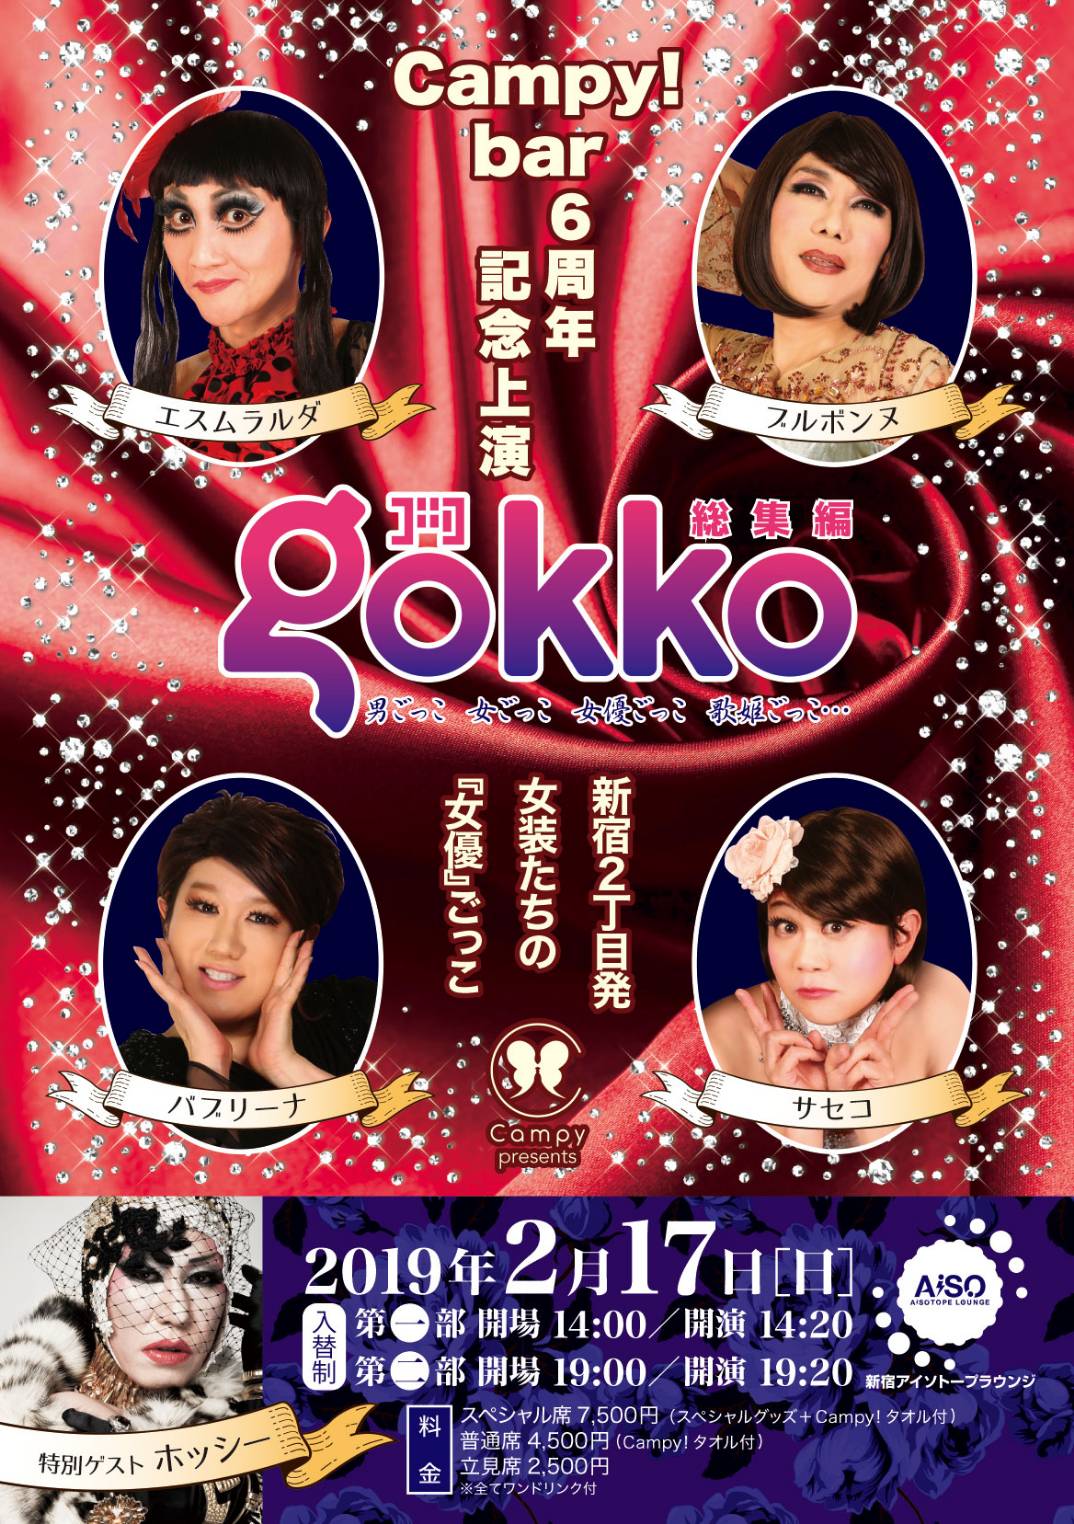 GOKKO 総集編 　～Campy! bar ６周年記念上演～